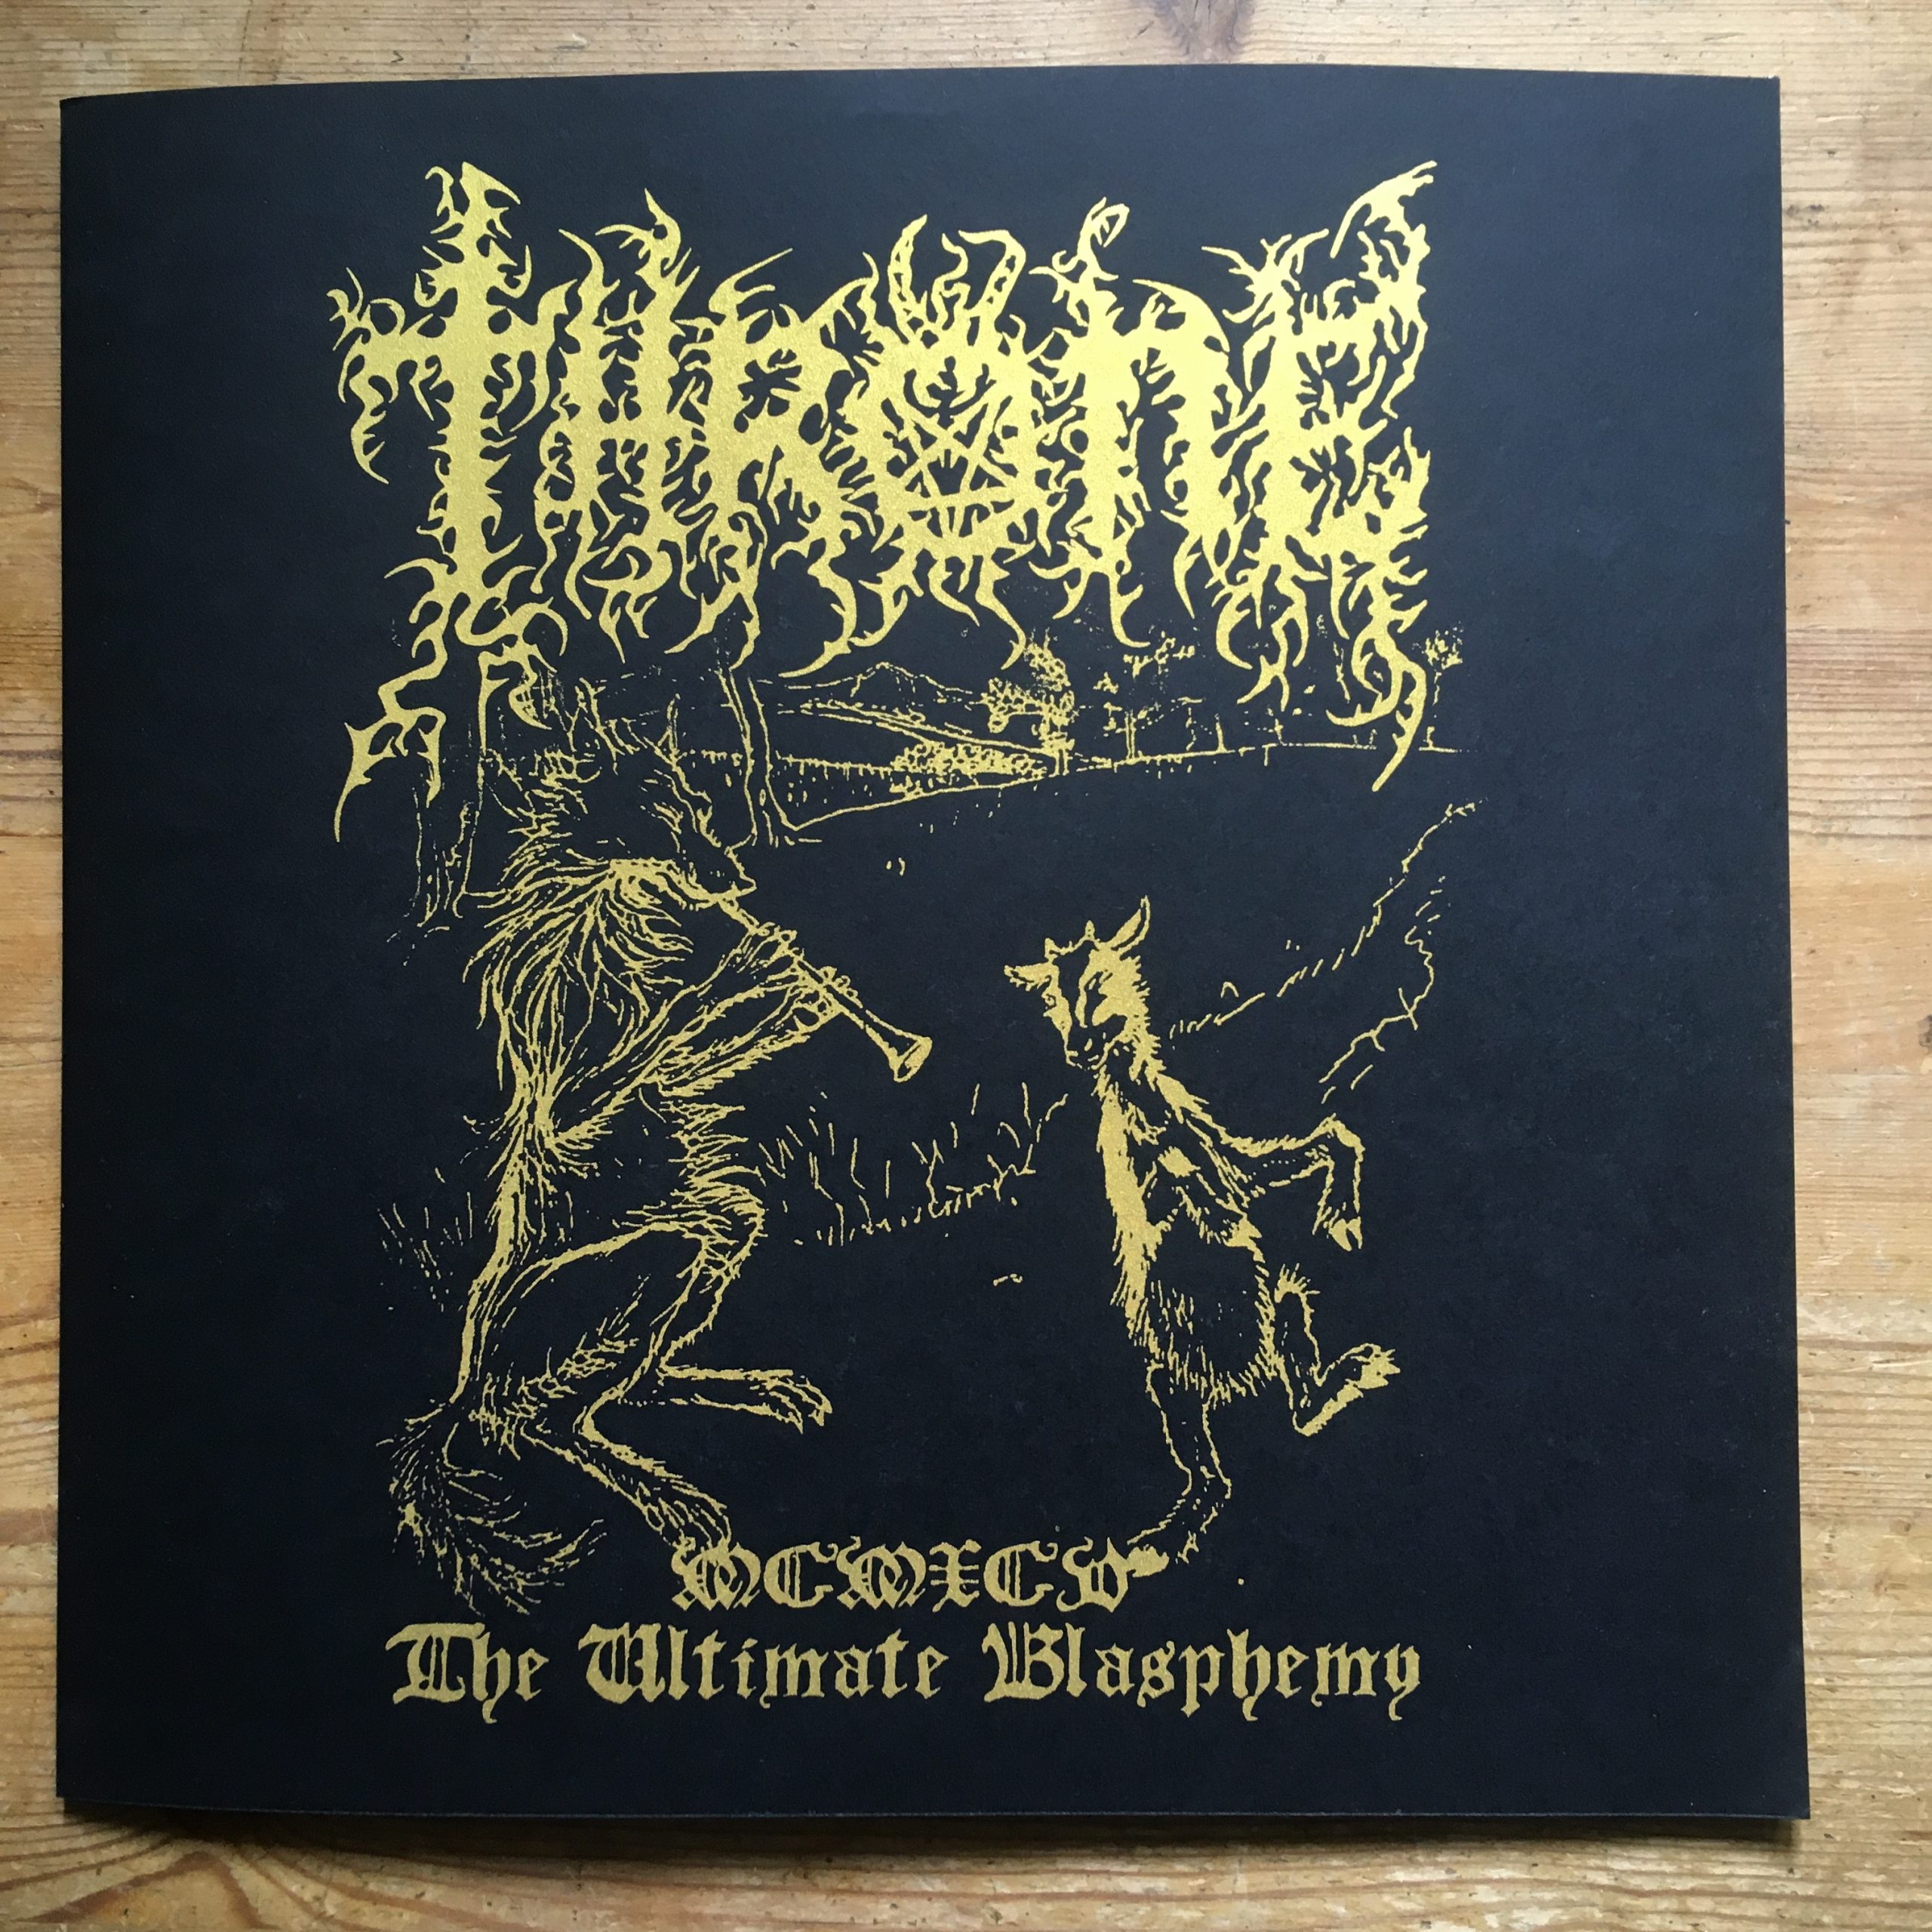 Photo of the Throne - "MCMXCV: The Ultimate Blasphemy" LP (Black vinyl)